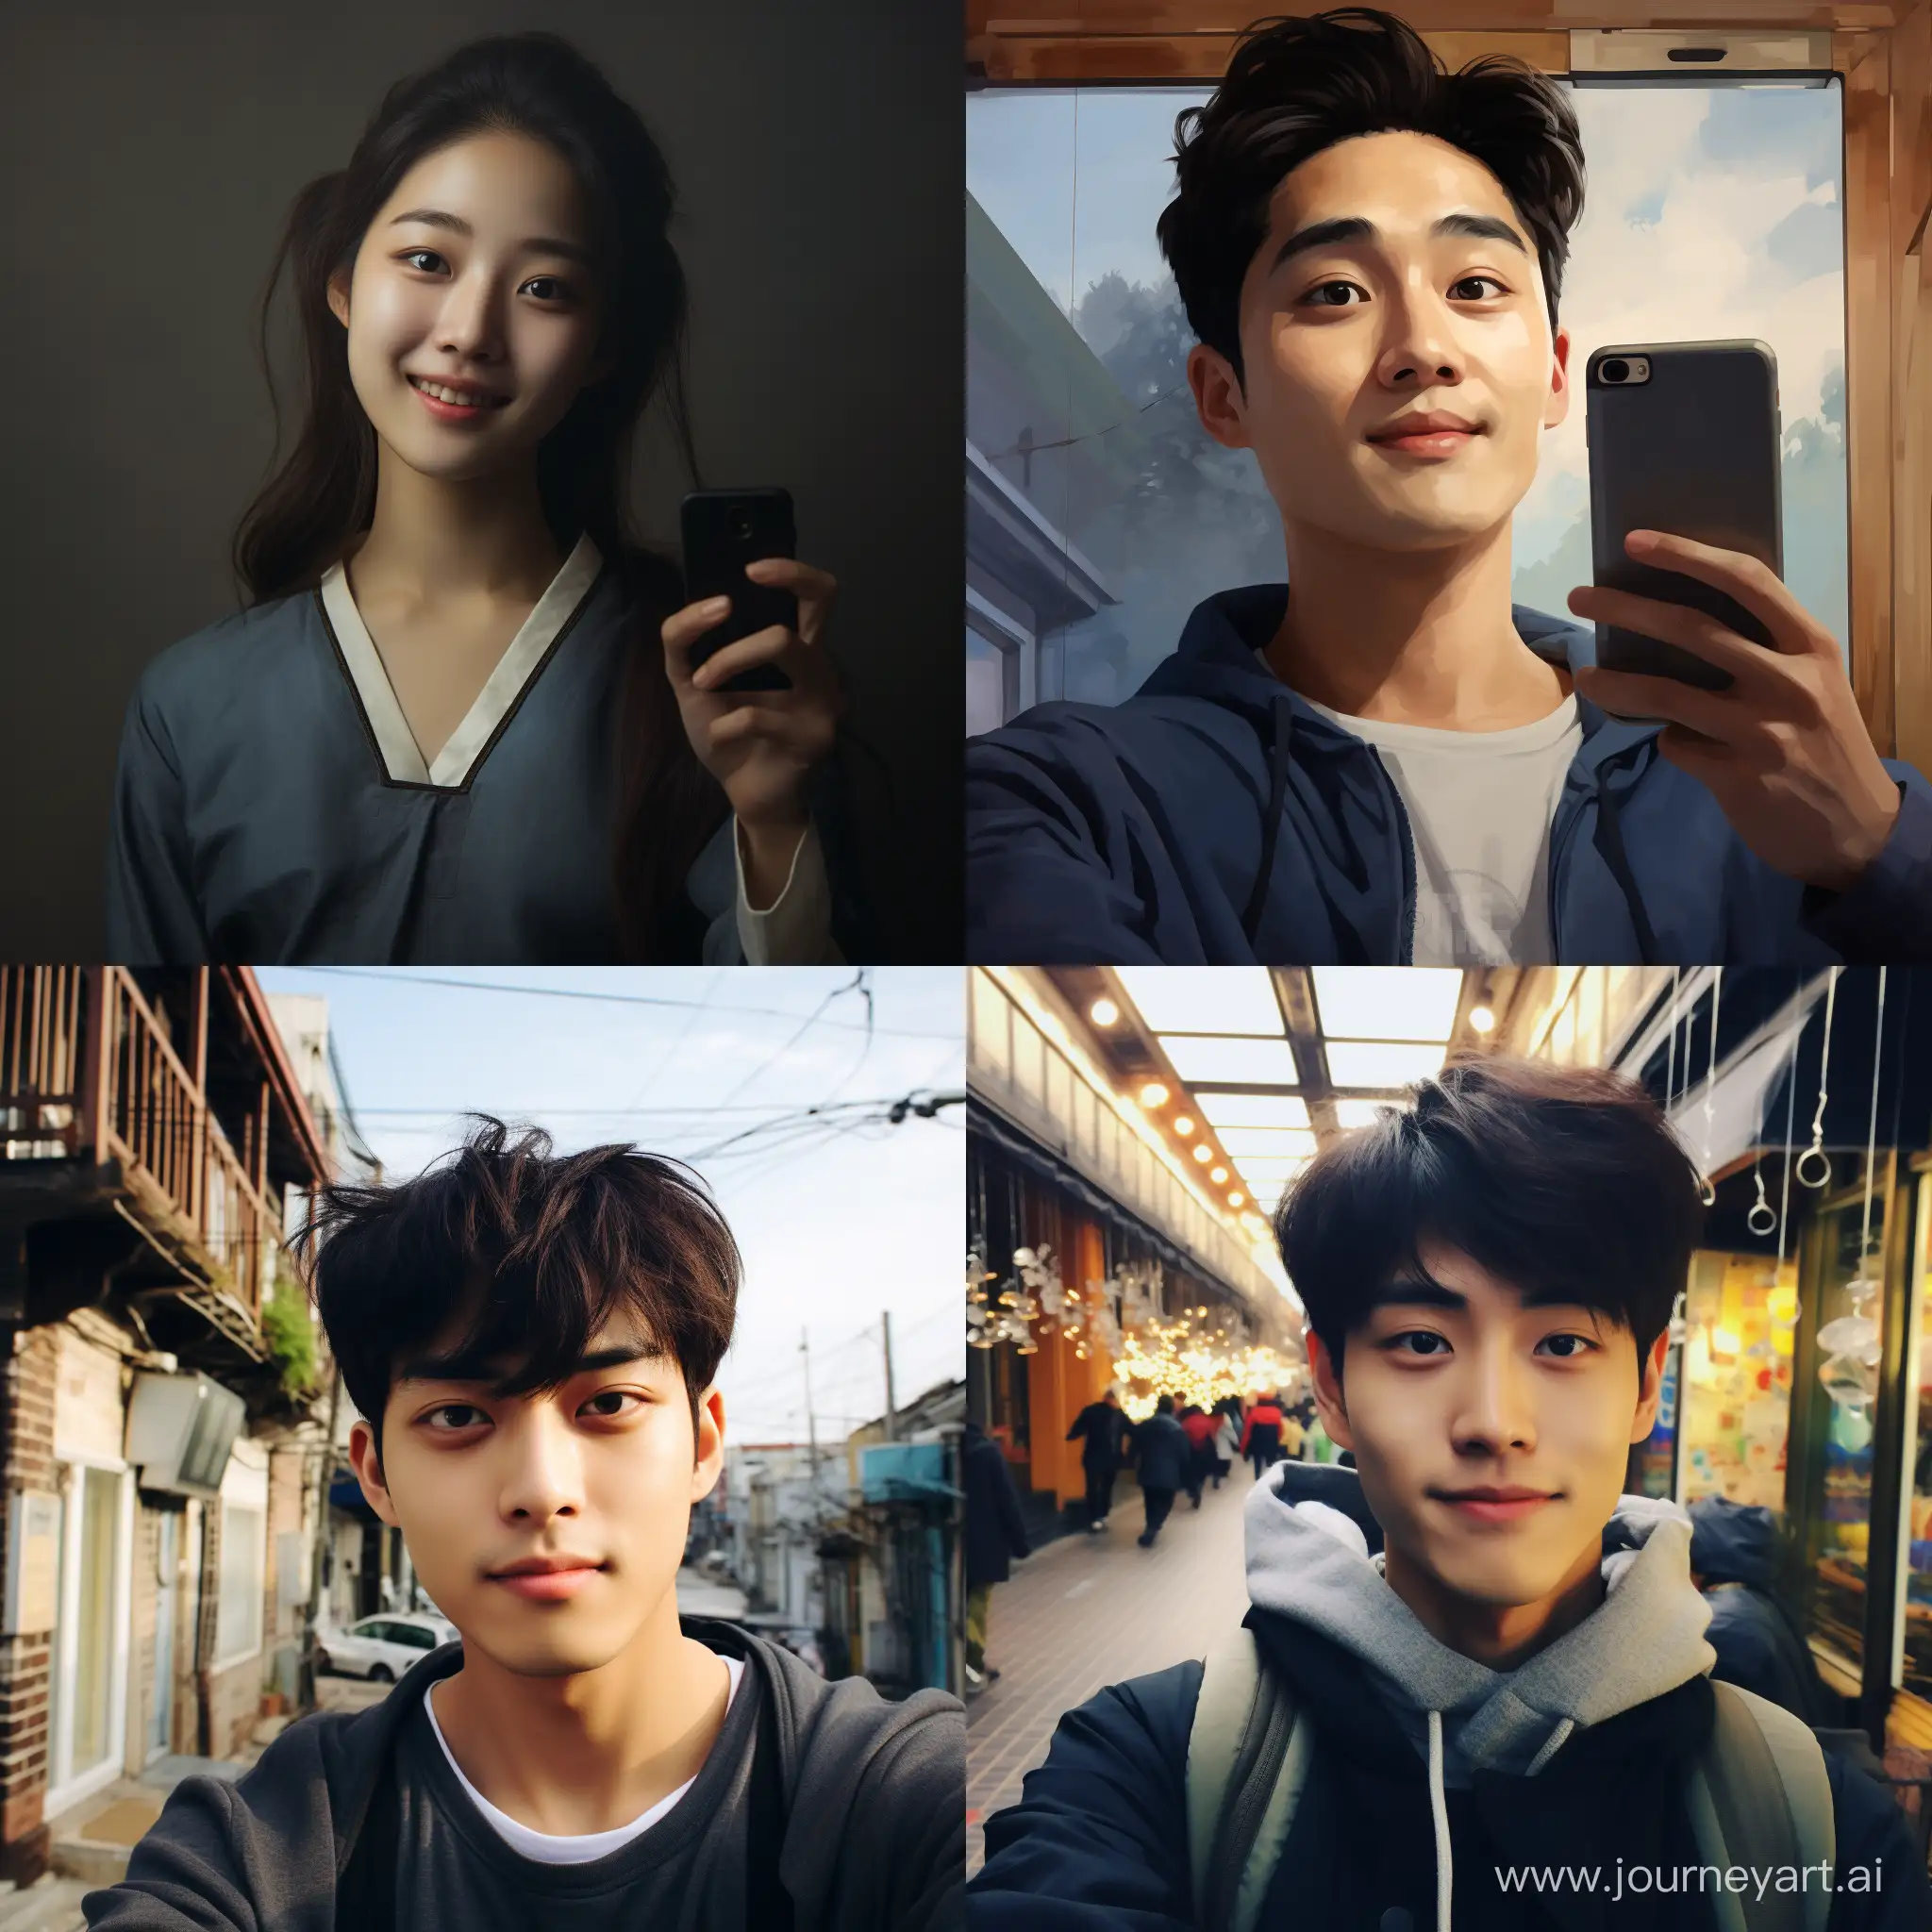 Authentic-Korean-Selfie-Moment-in-Realistic-11-Aspect-Ratio